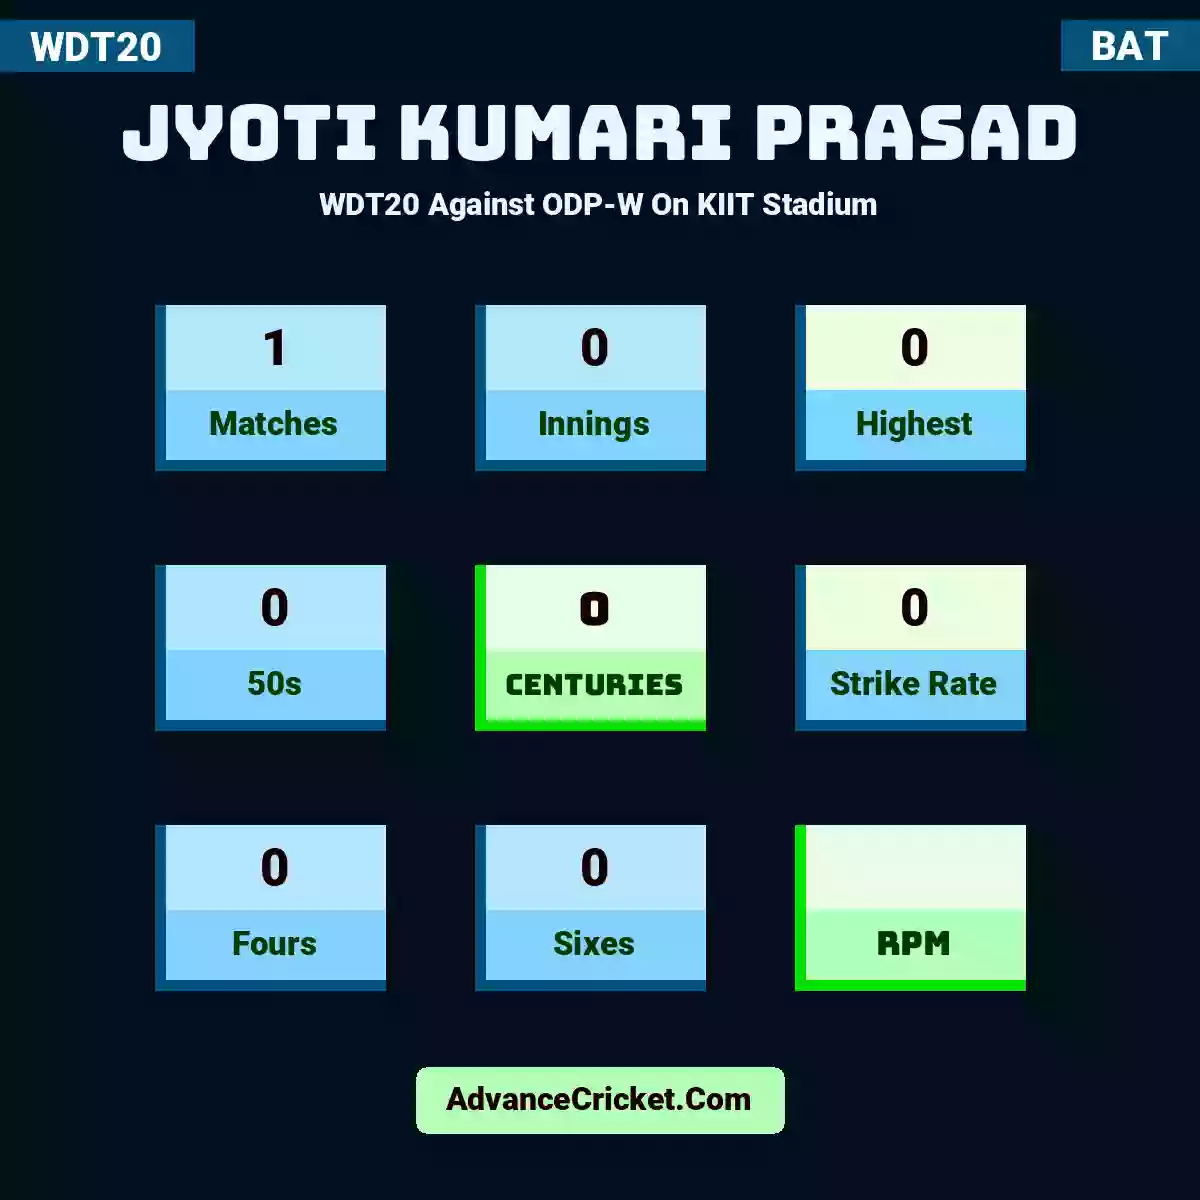 Jyoti Kumari Prasad WDT20  Against ODP-W On KIIT Stadium, Jyoti Kumari Prasad played 1 matches, scored 0 runs as highest, 0 half-centuries, and 0 centuries, with a strike rate of 0. J.Kumari Prasad hit 0 fours and 0 sixes.